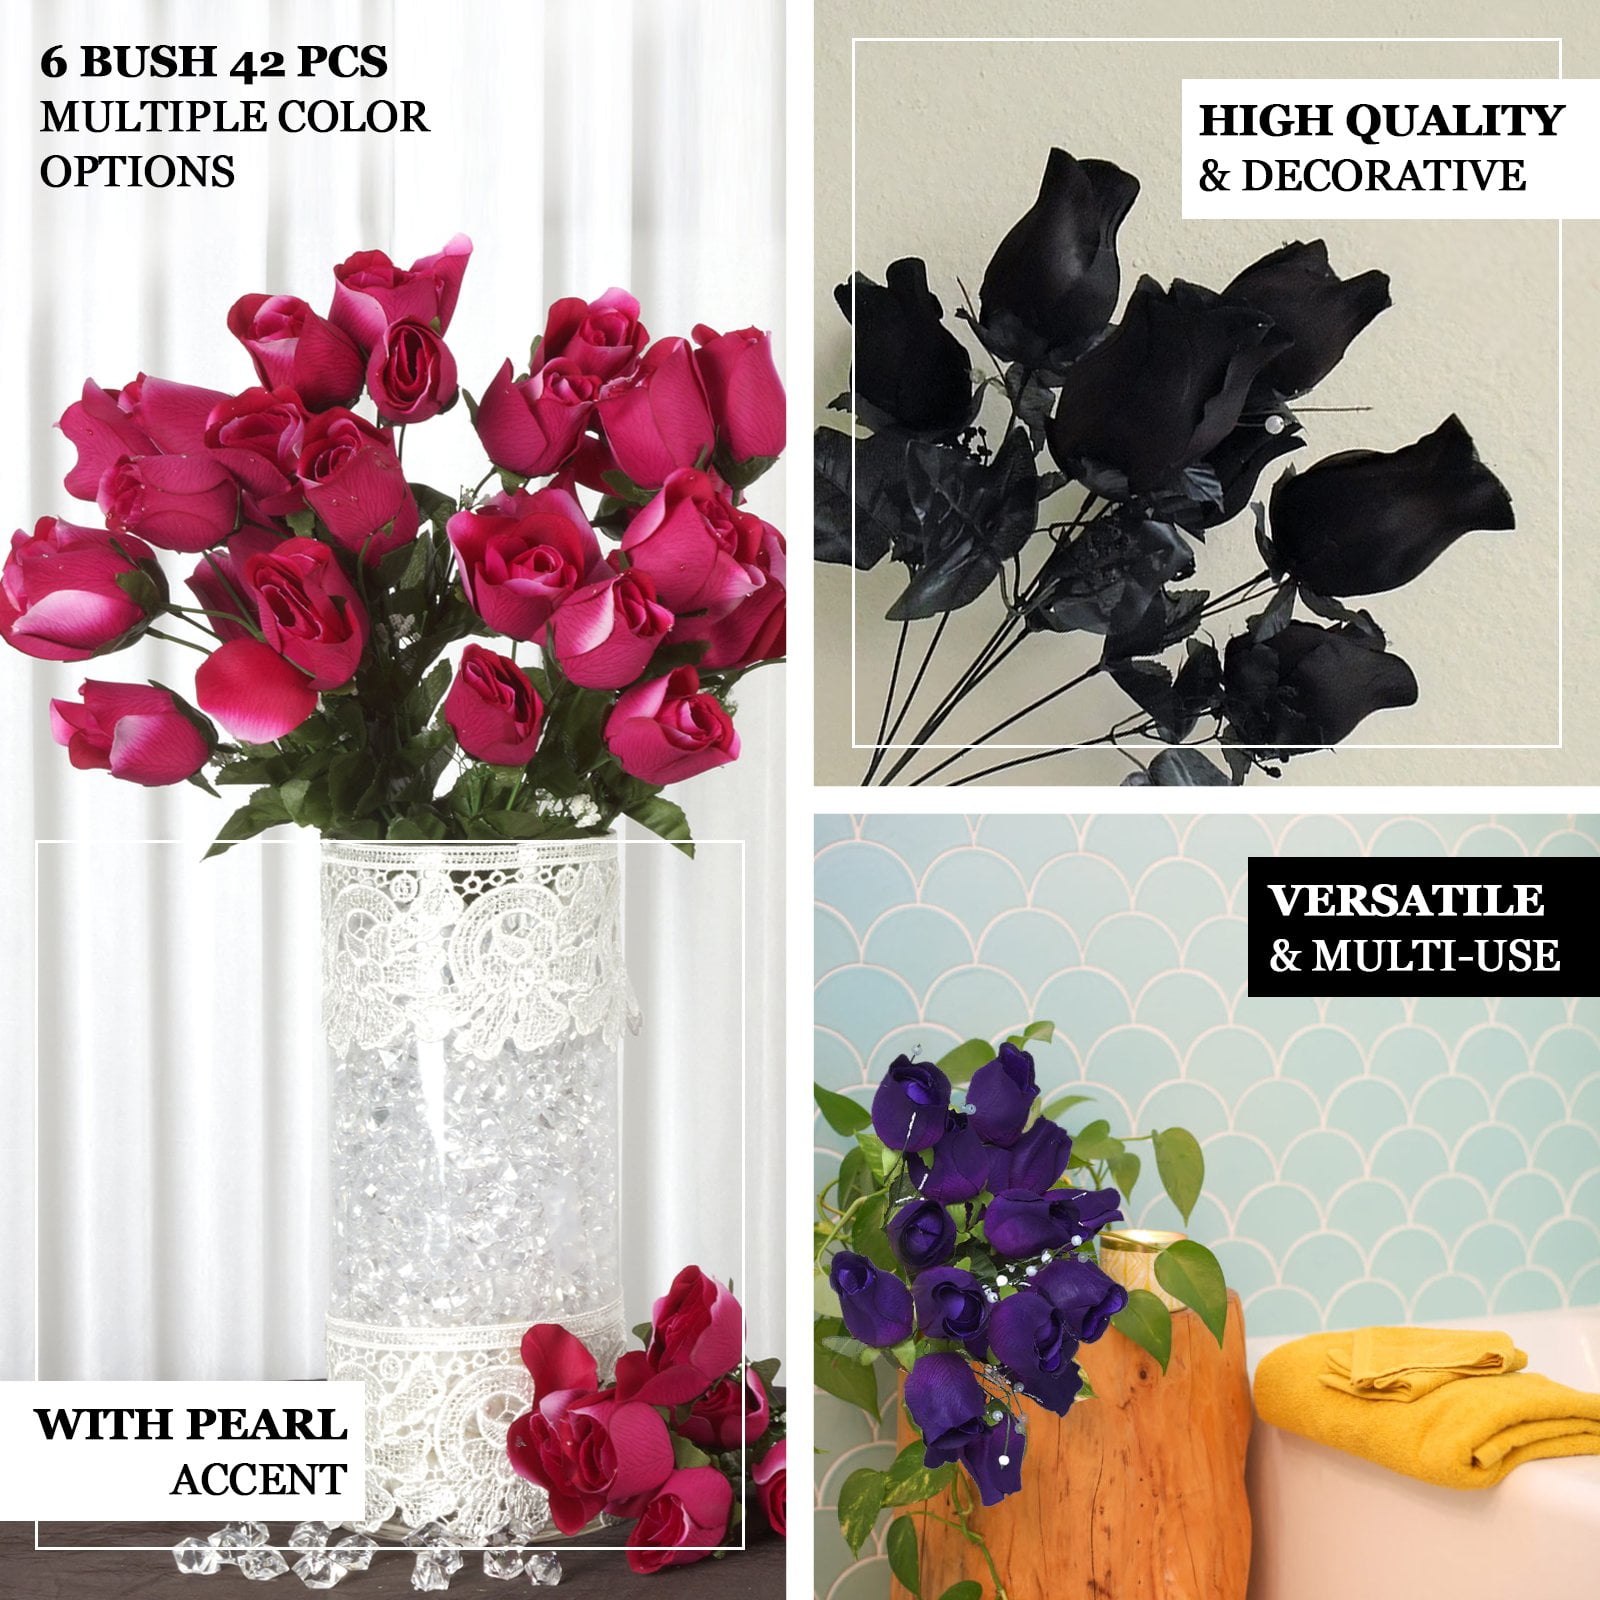 84 XL Velvet ROSE BUDS Long Stems Bushes Wedding Craft Party Flowers Wholesale 